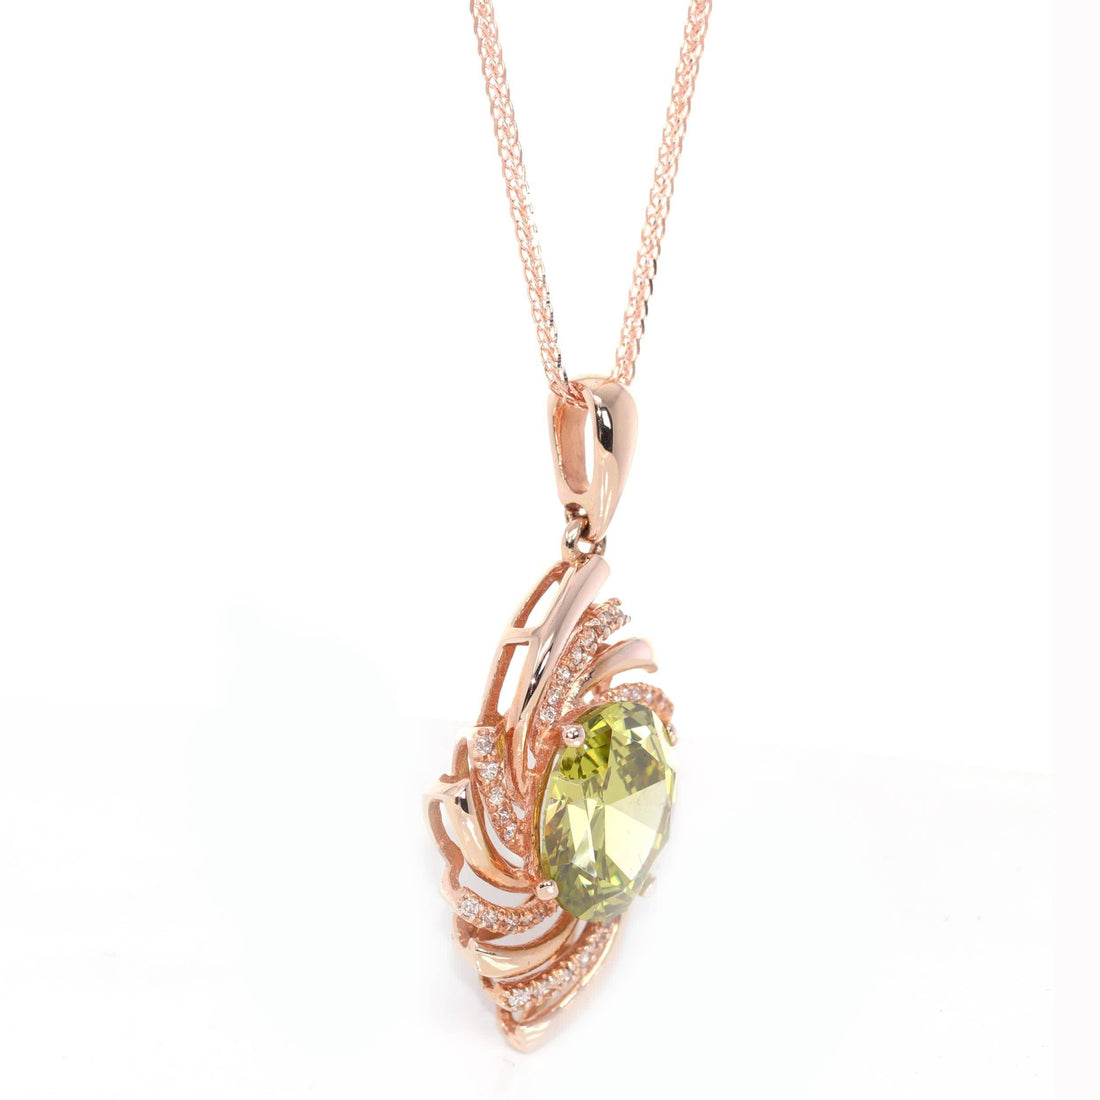 Baikalla Jewelry Gemstone Pendant Necklace 18k Rose Gold Genuine AAA Royal Peridot Pendant Necklace With CZ